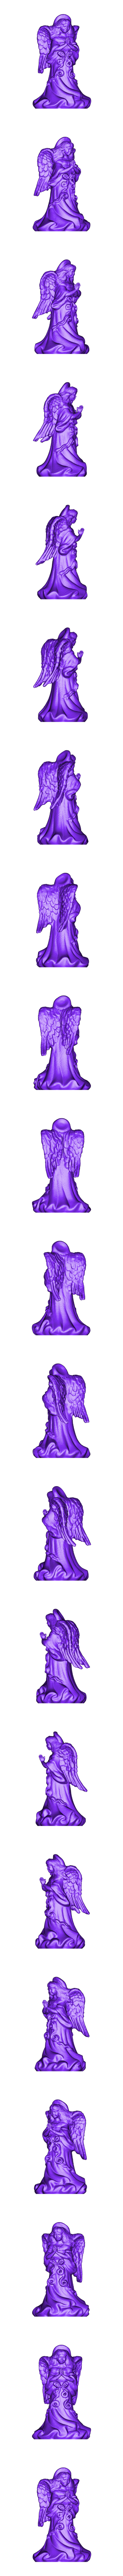 MBThriftStoreAngel3DL_resculpt_S.obj Download free OBJ file ThriftStore Angel--Digitized!! Resculpt • Object to 3D print, 3DLirious